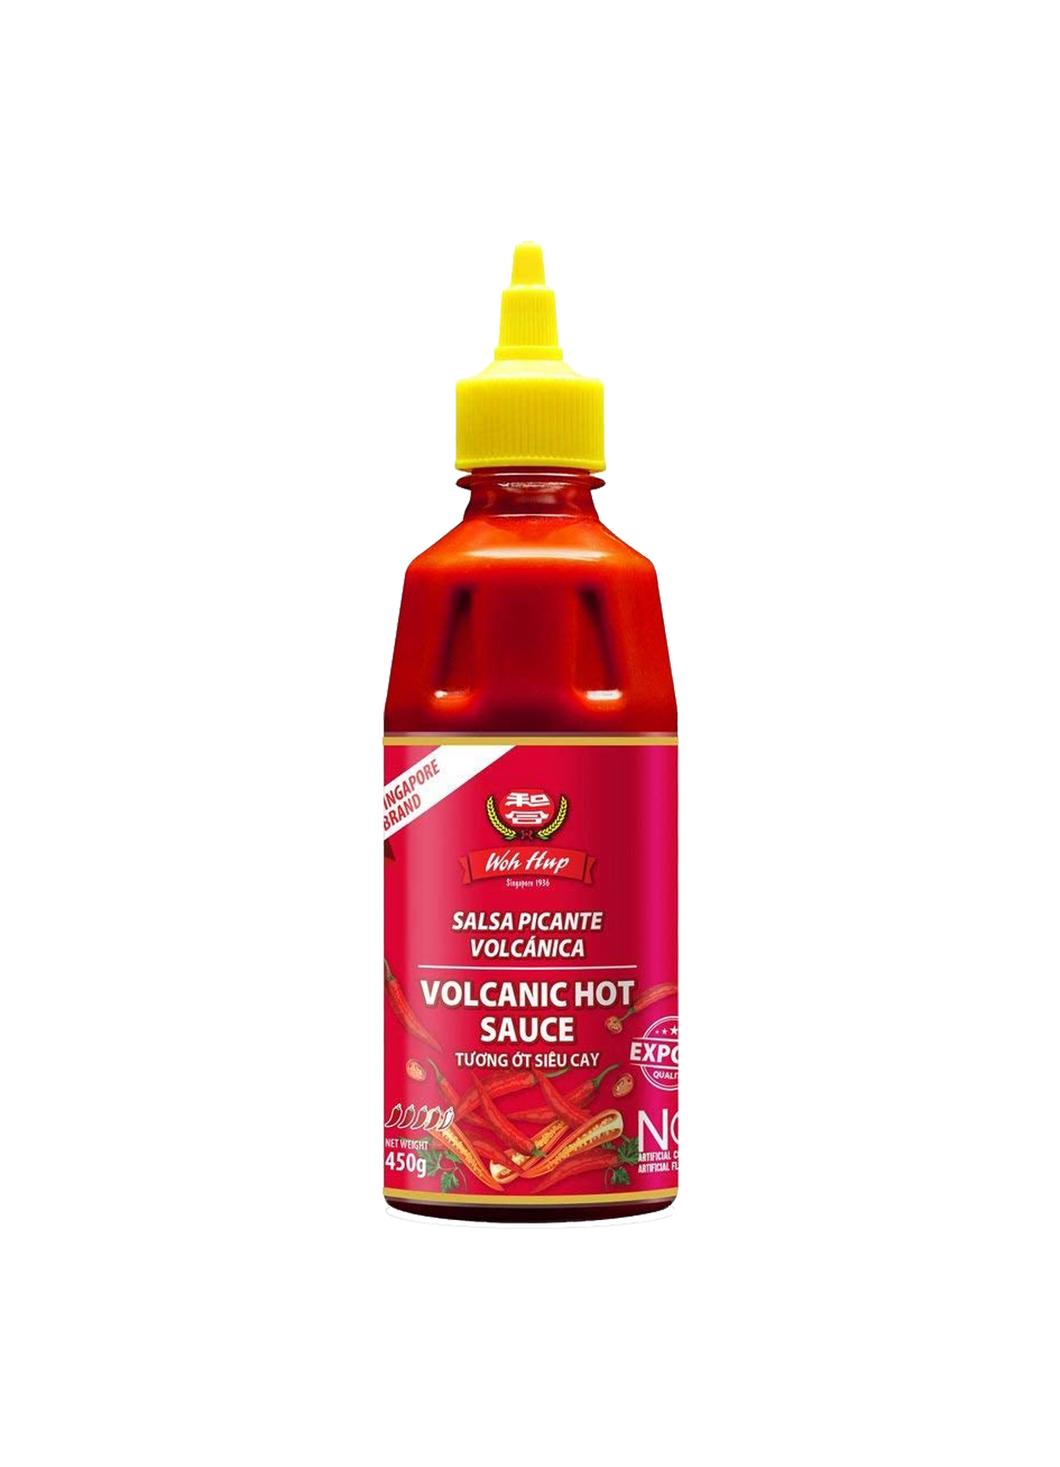 Woh Hup Volcanic Hot Sauce 450g